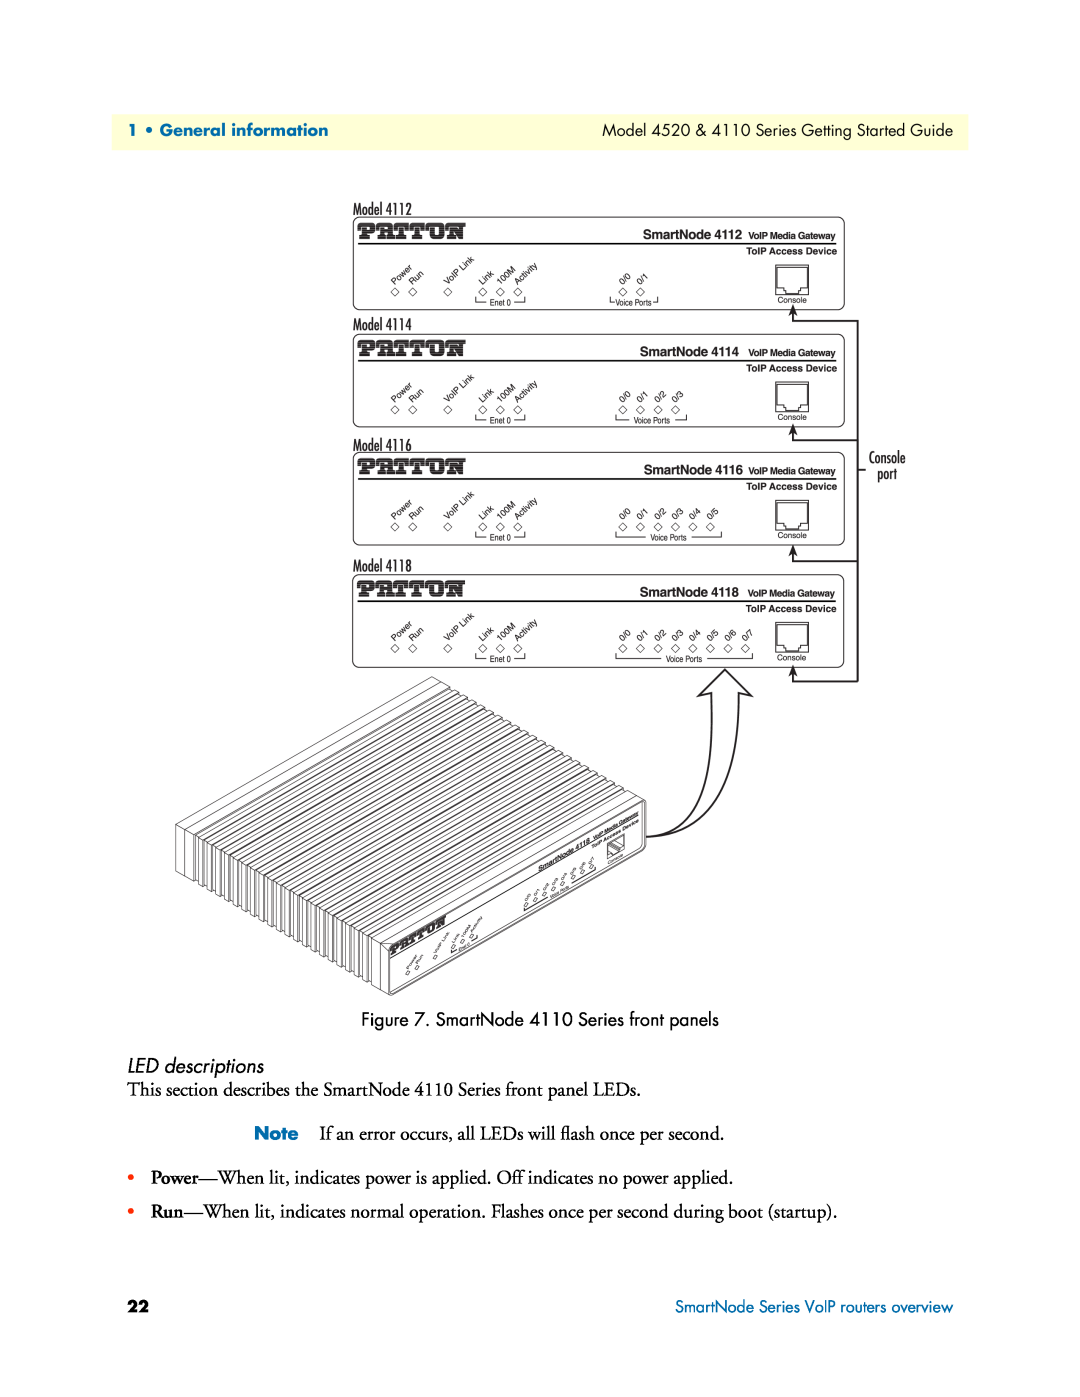 Patton electronic manual LED descriptions, SmartNode 4110 Series front panels 